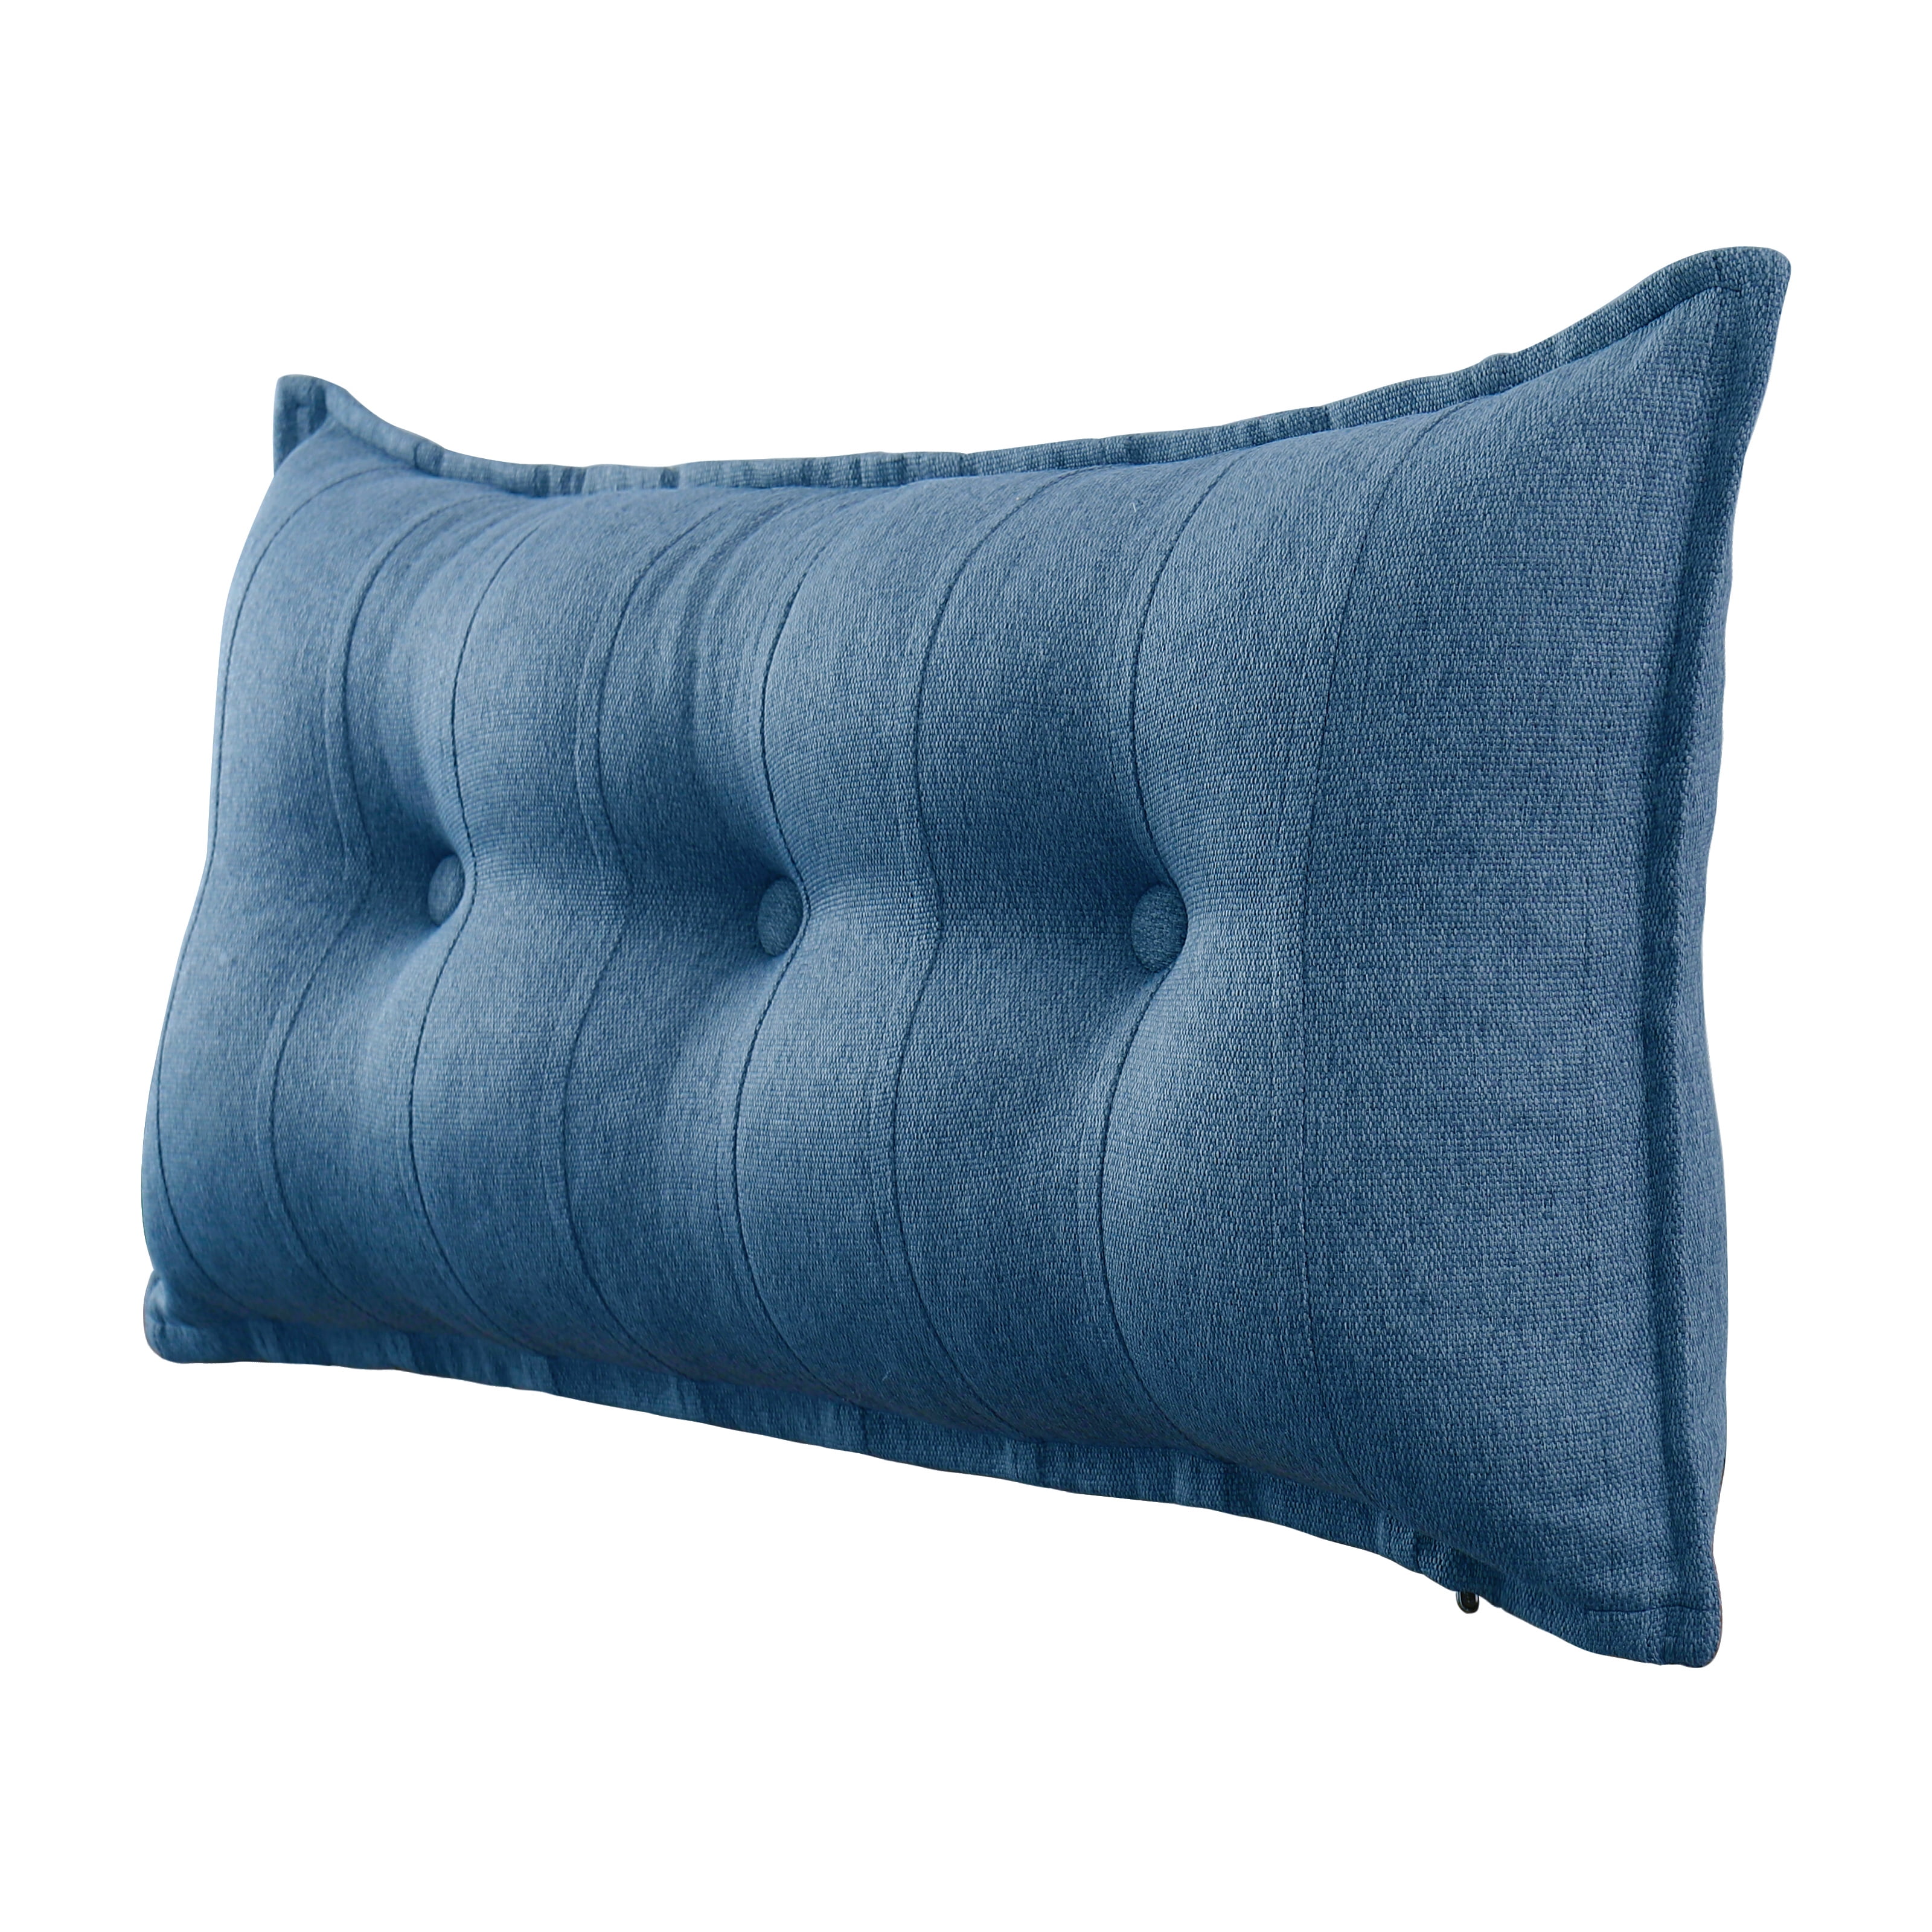 Rounuo Bed Wedge Pillow for Headboard, Full Triangular Reading Pillow Linen  Large Bolster Backrest Support Upholstered Lumbar Cushion Green 54x20